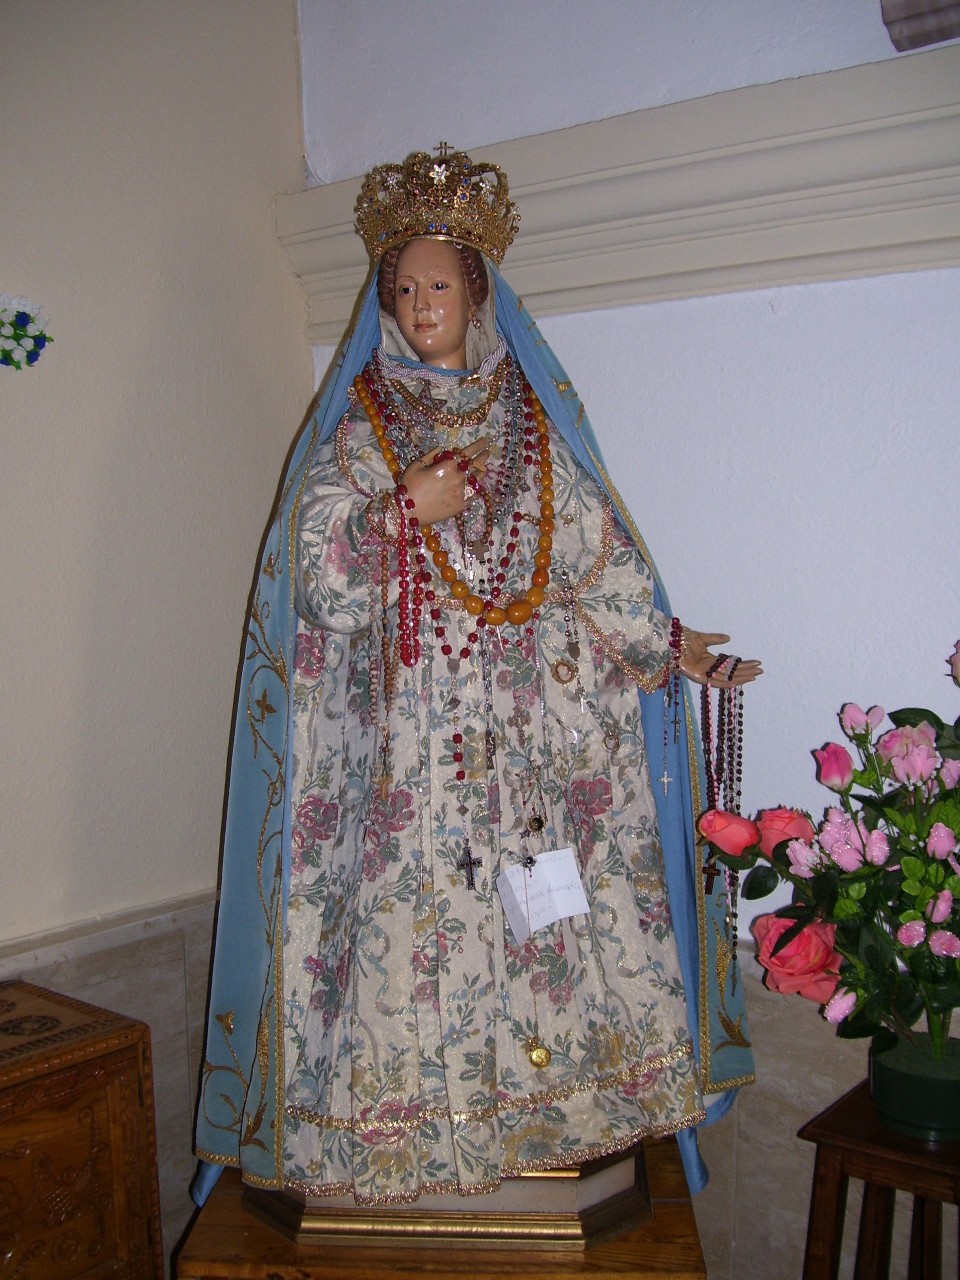 S'annossata, madonna annunciata (statua vestita)